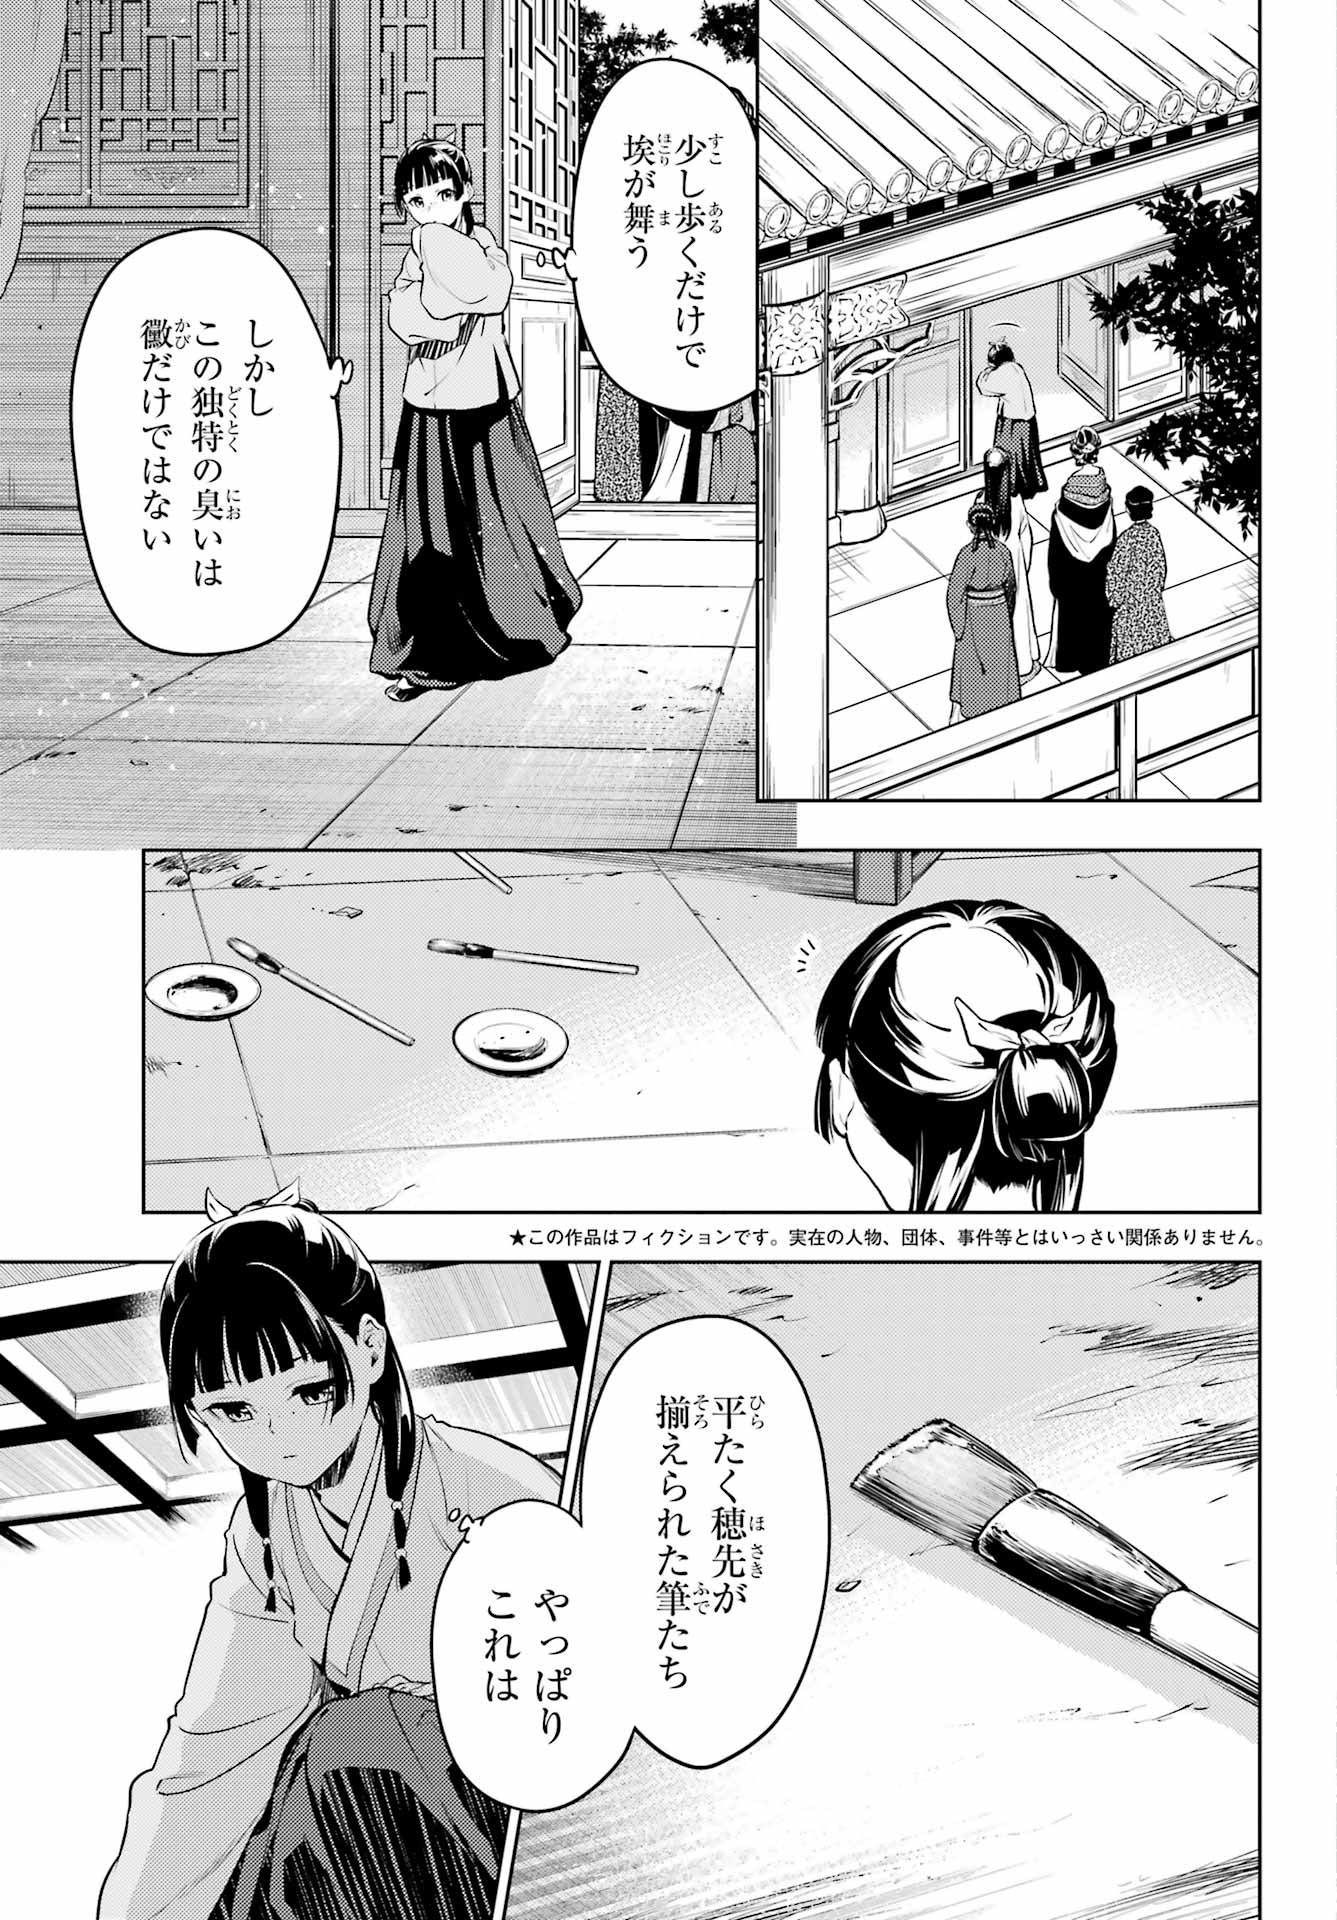 Kusuriya no Hitorigoto - Chapter 57 - Page 3